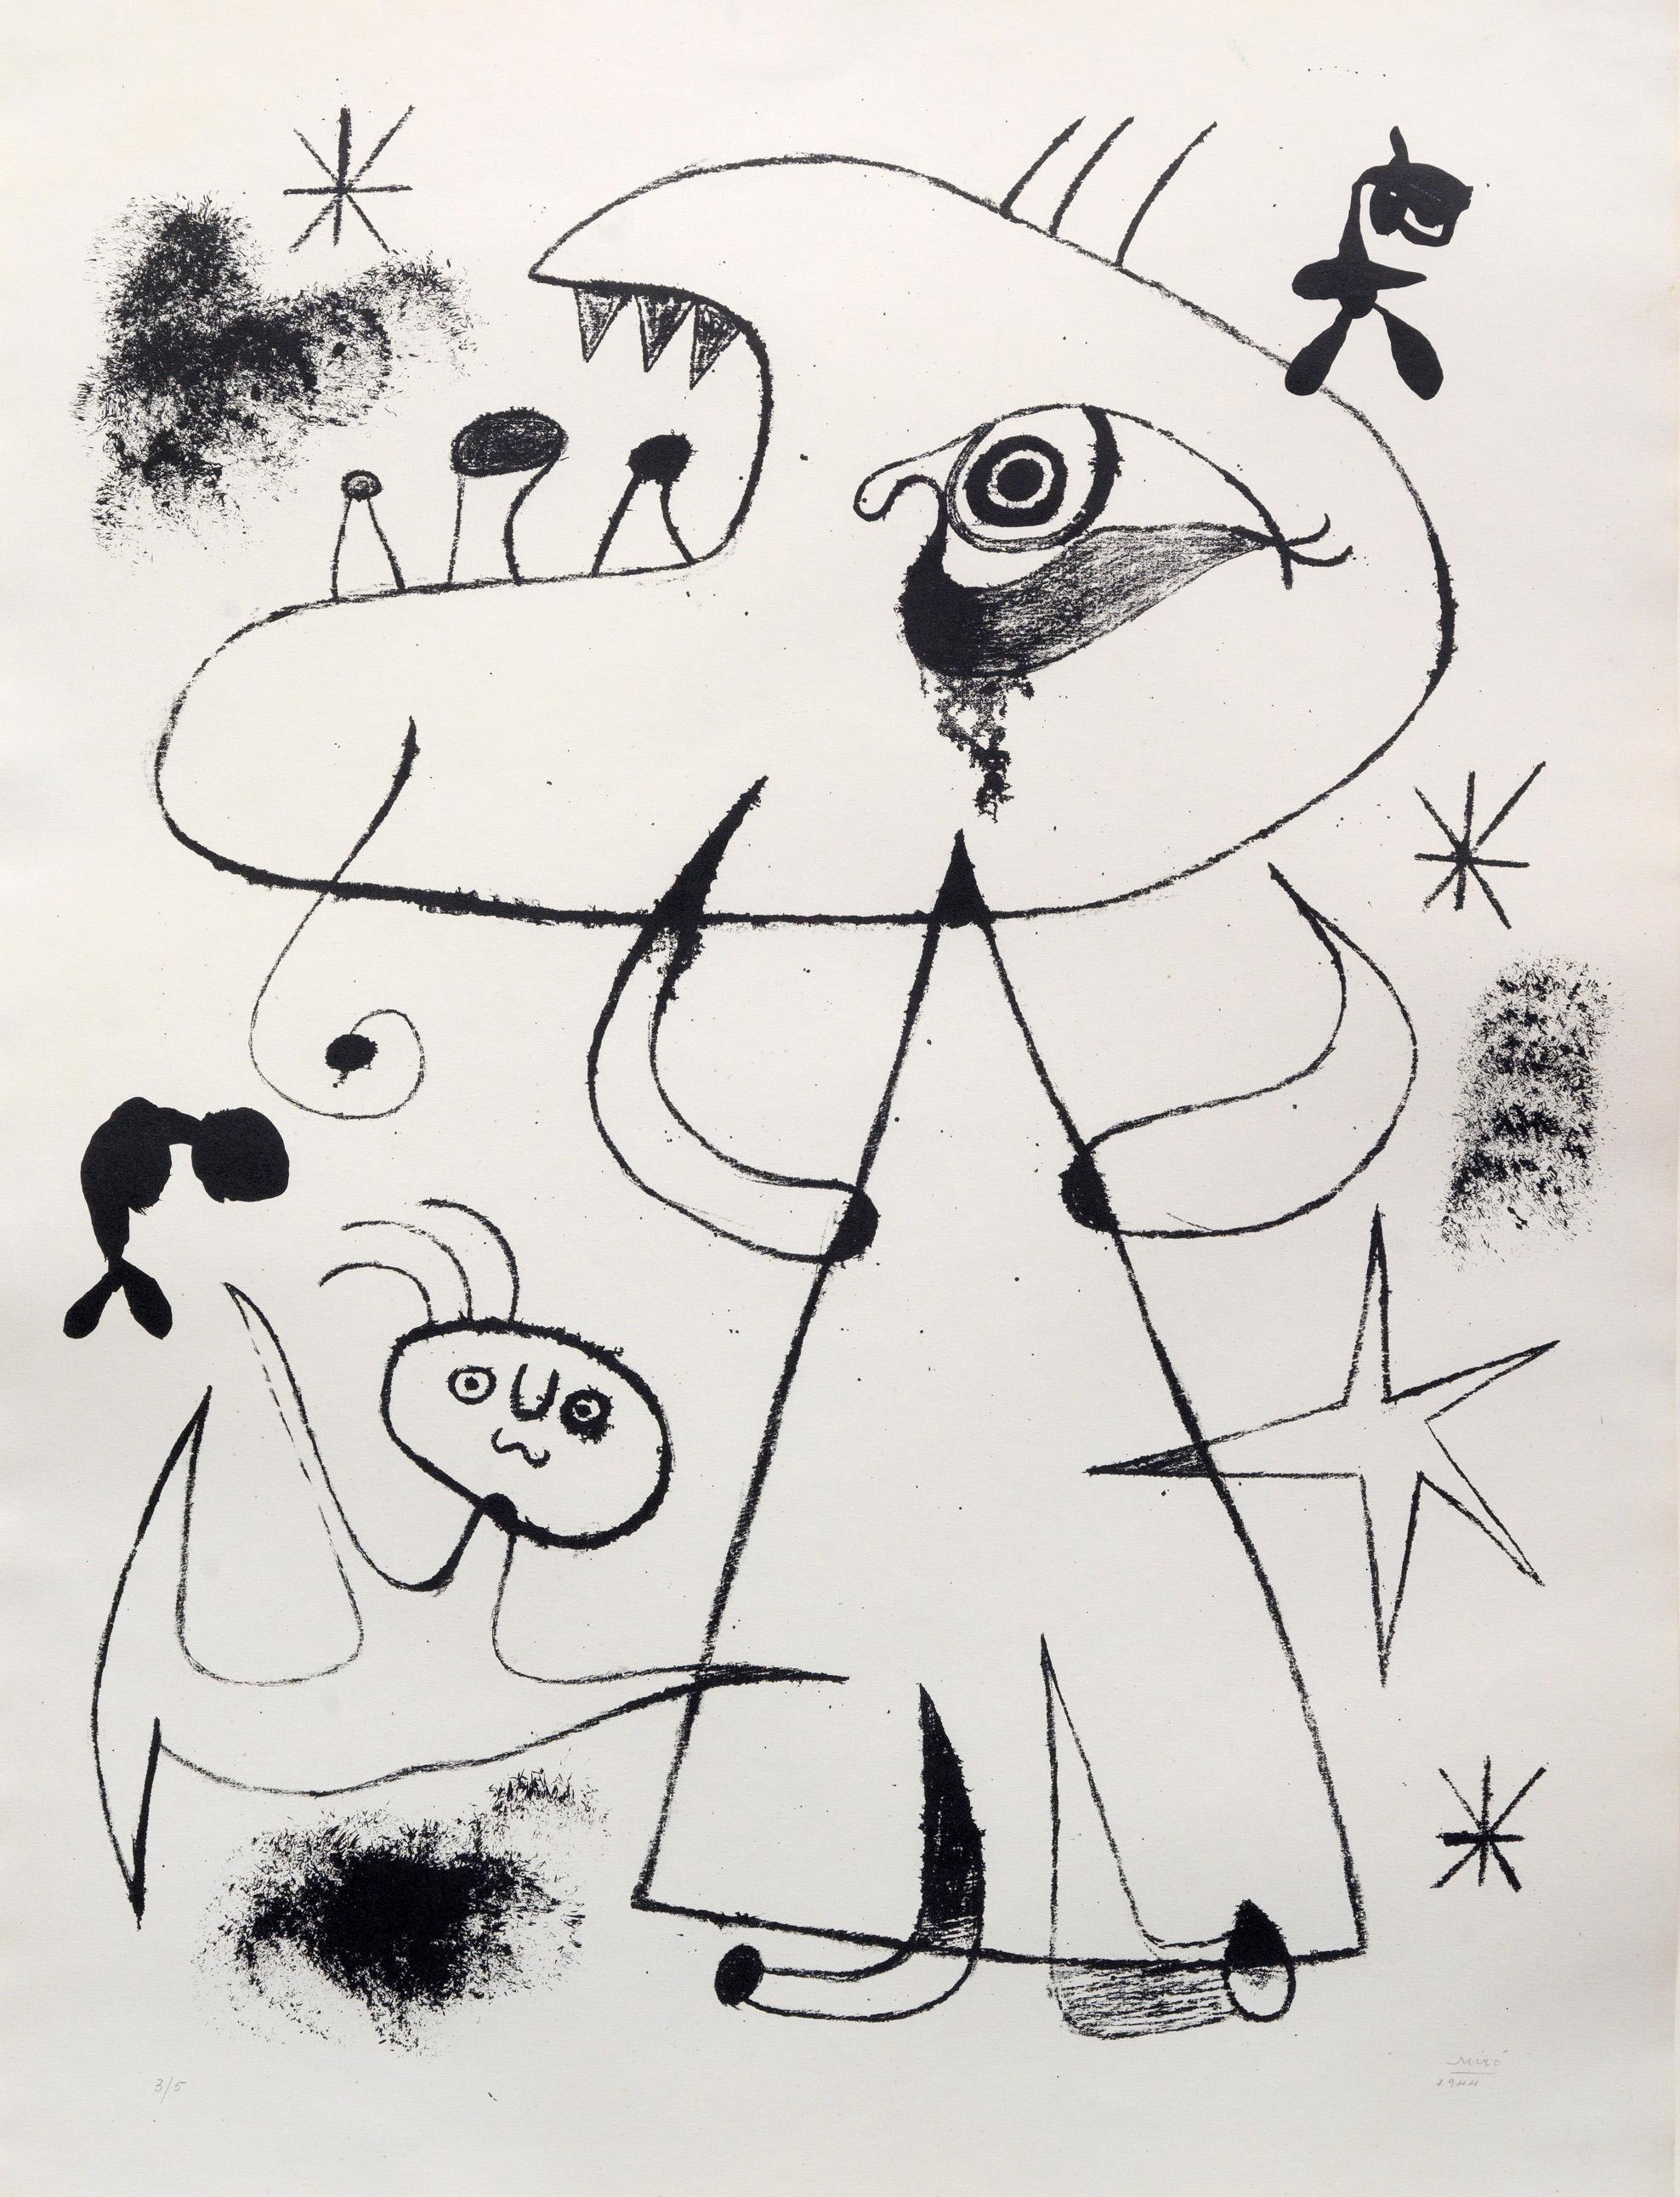 Barcelona: XXV - Joan Miró, Druck, Lithographie, Surrealismus, Fauvismus, Figurativ 